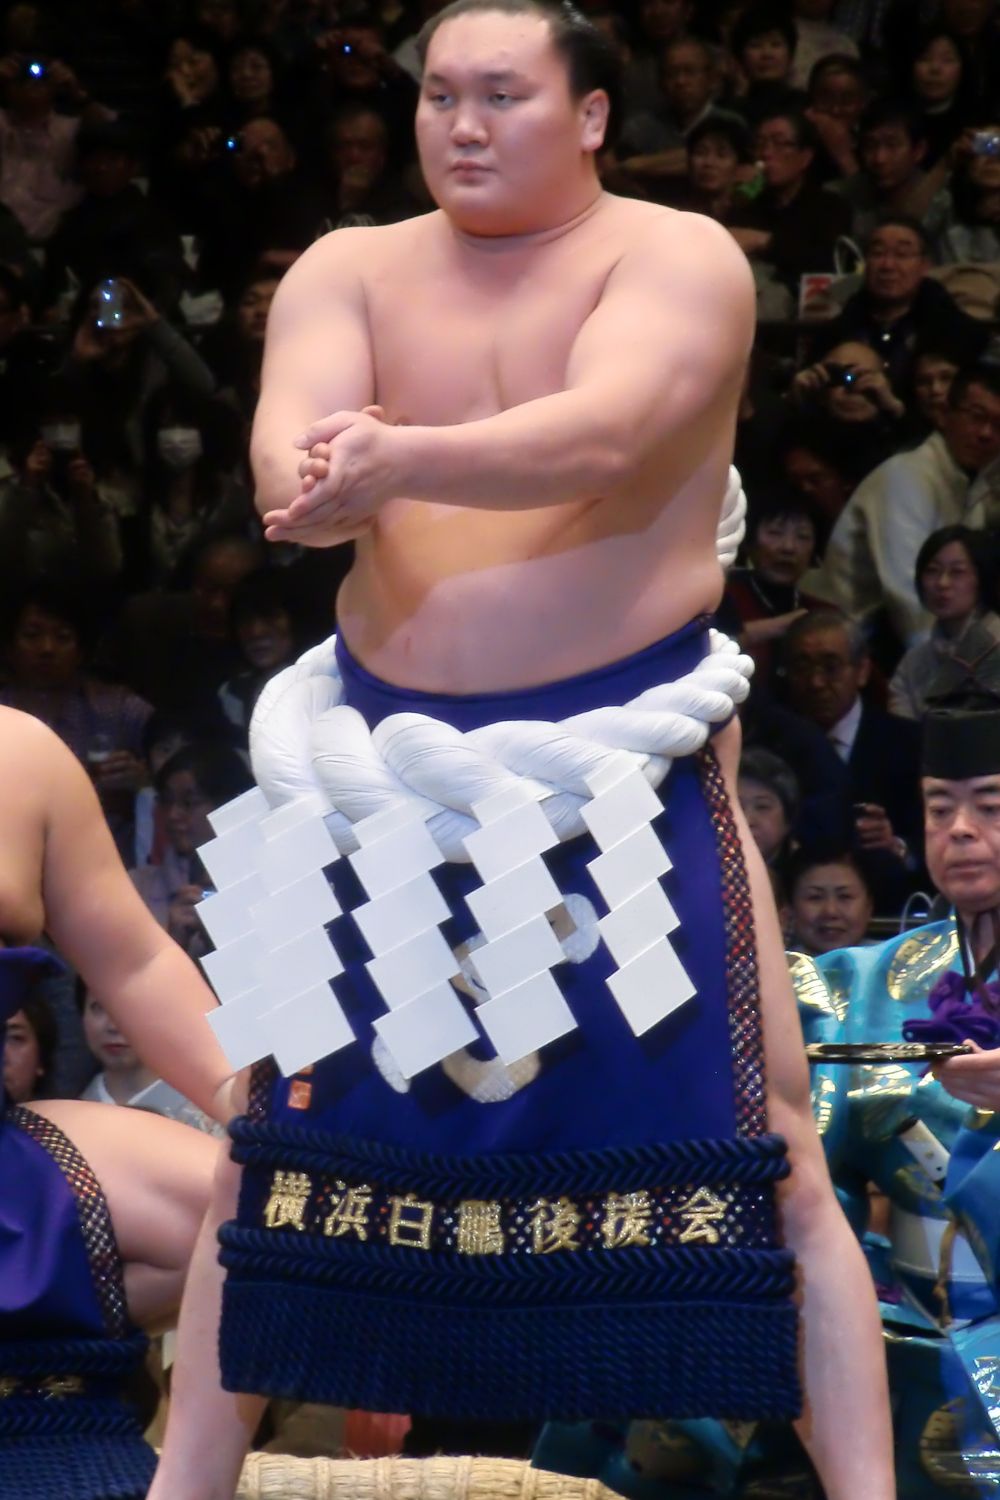 Hukuho Sho Is The Highest Sumo Tournament Winner (Source: Wikipedia)